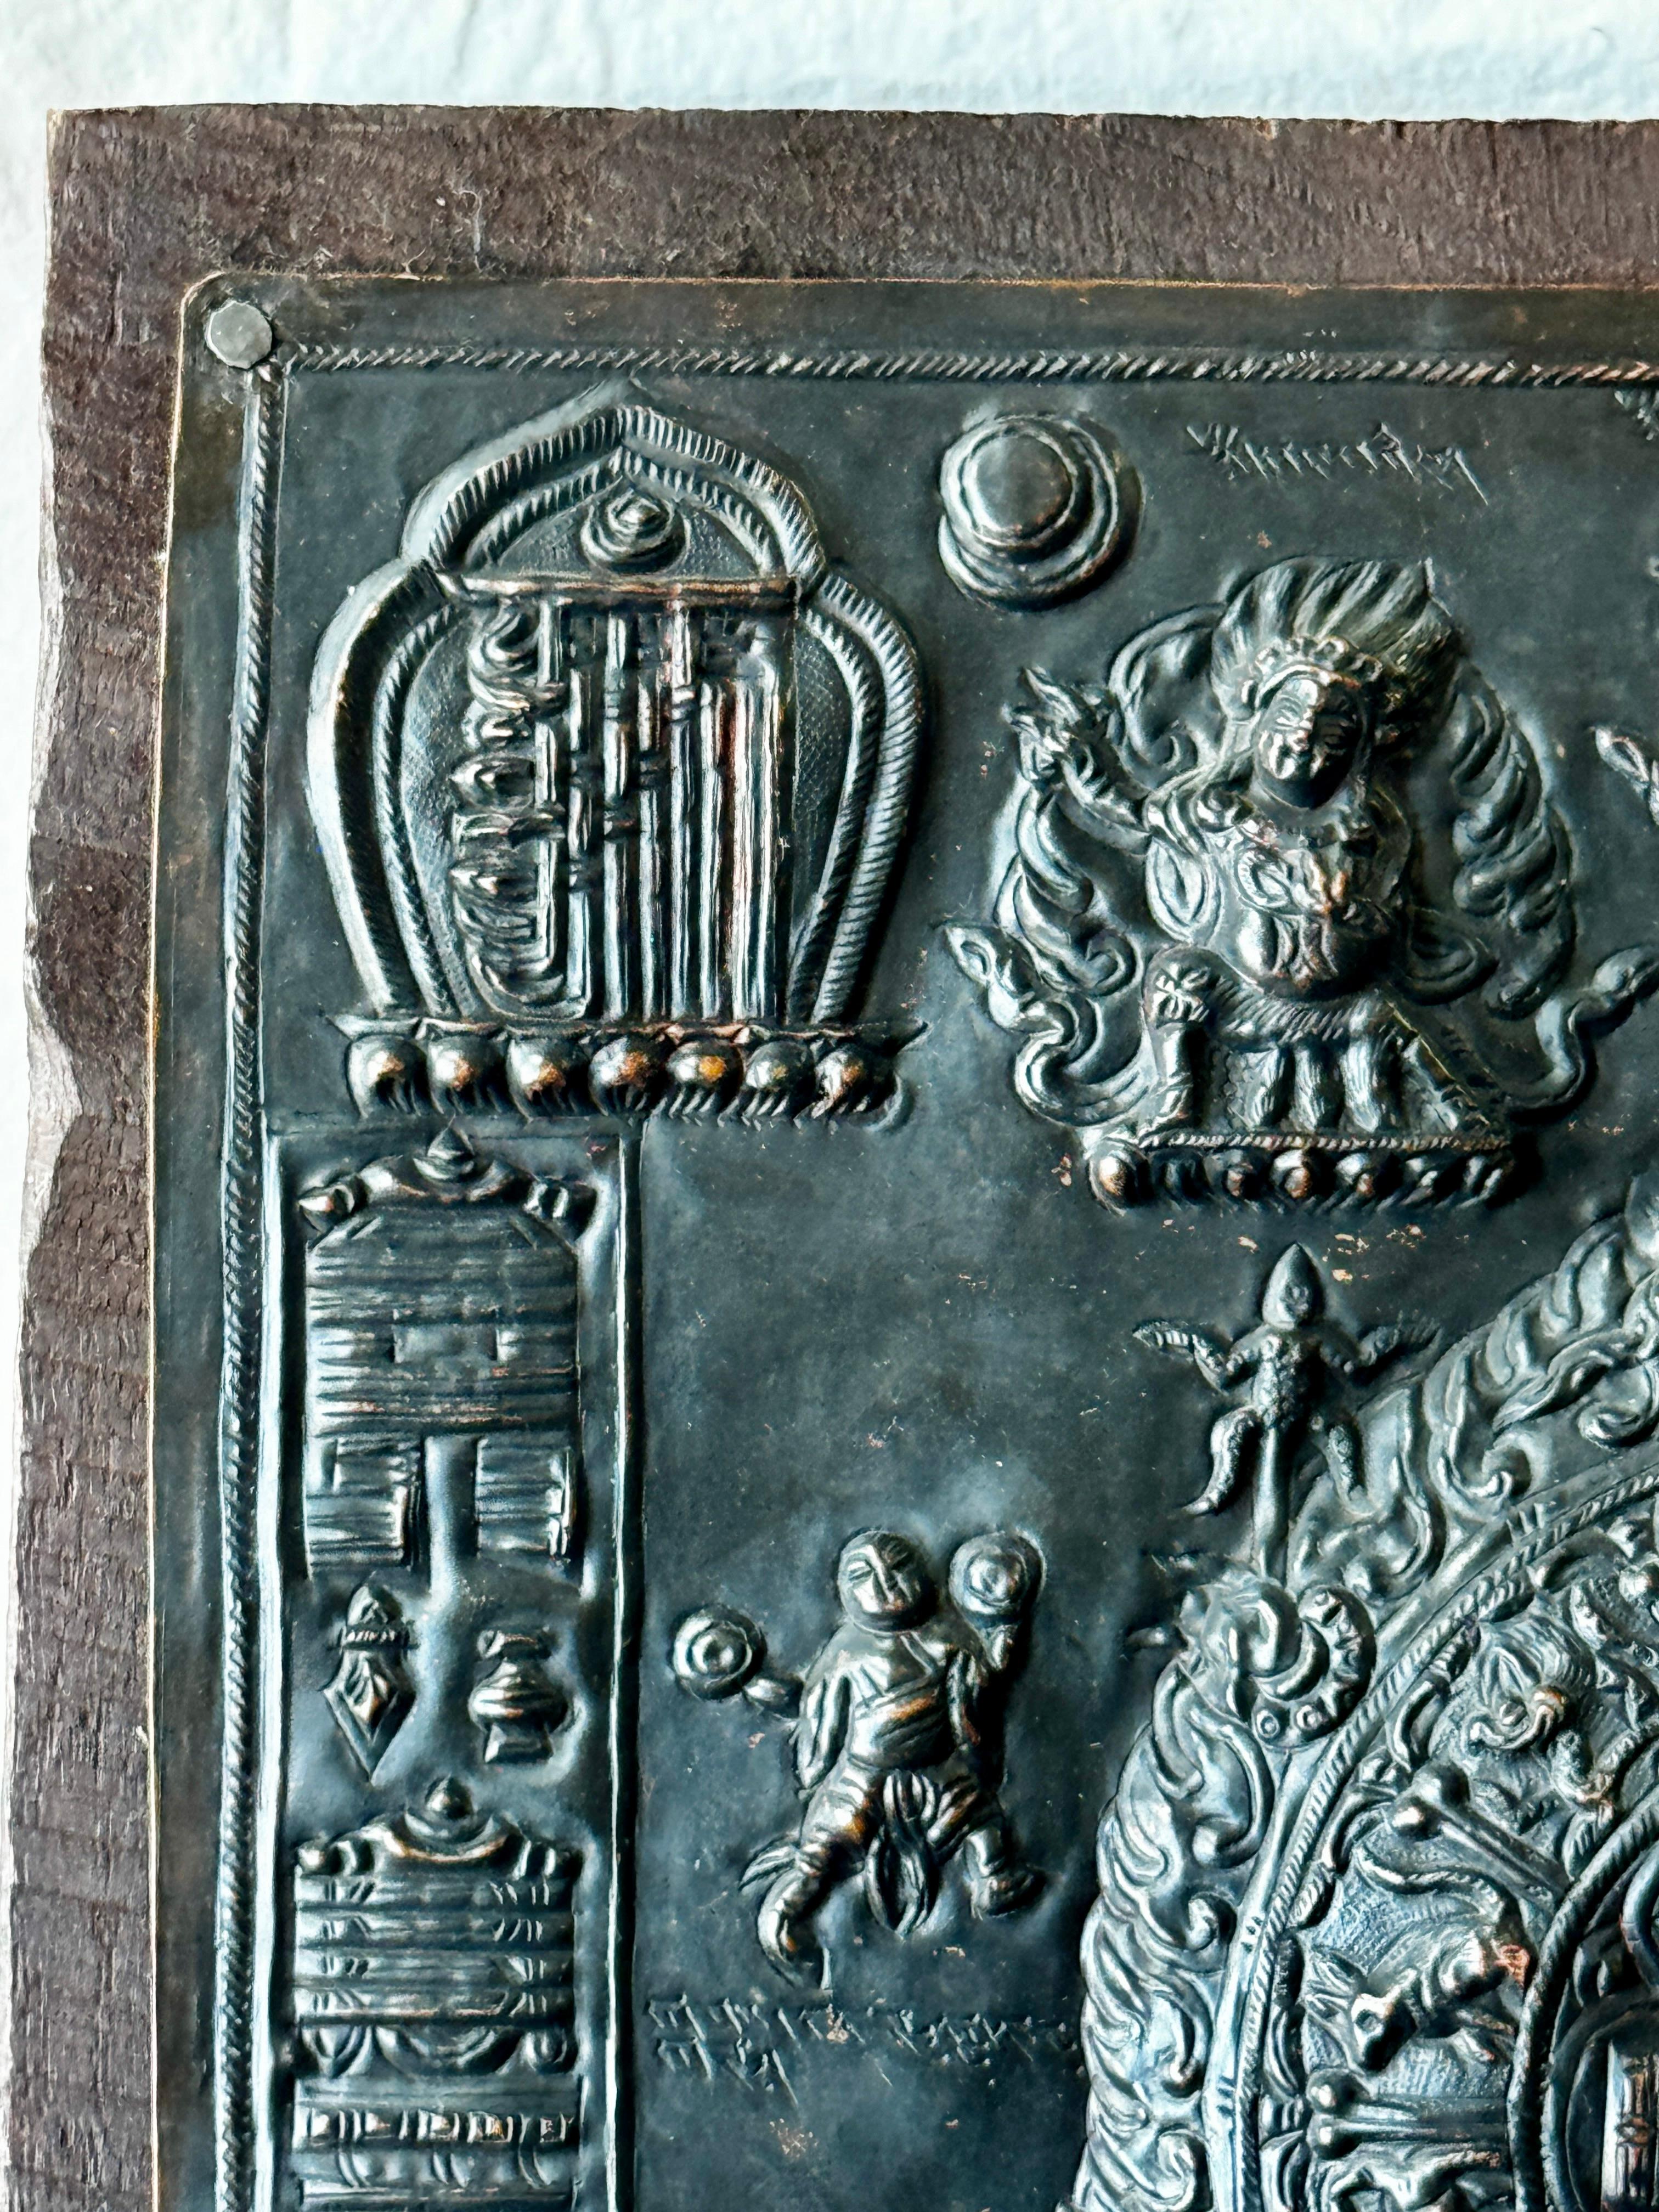 Early Tibetan Copper Bronze Chased Plaque Depicting Zodiac Calendar

Framed 13